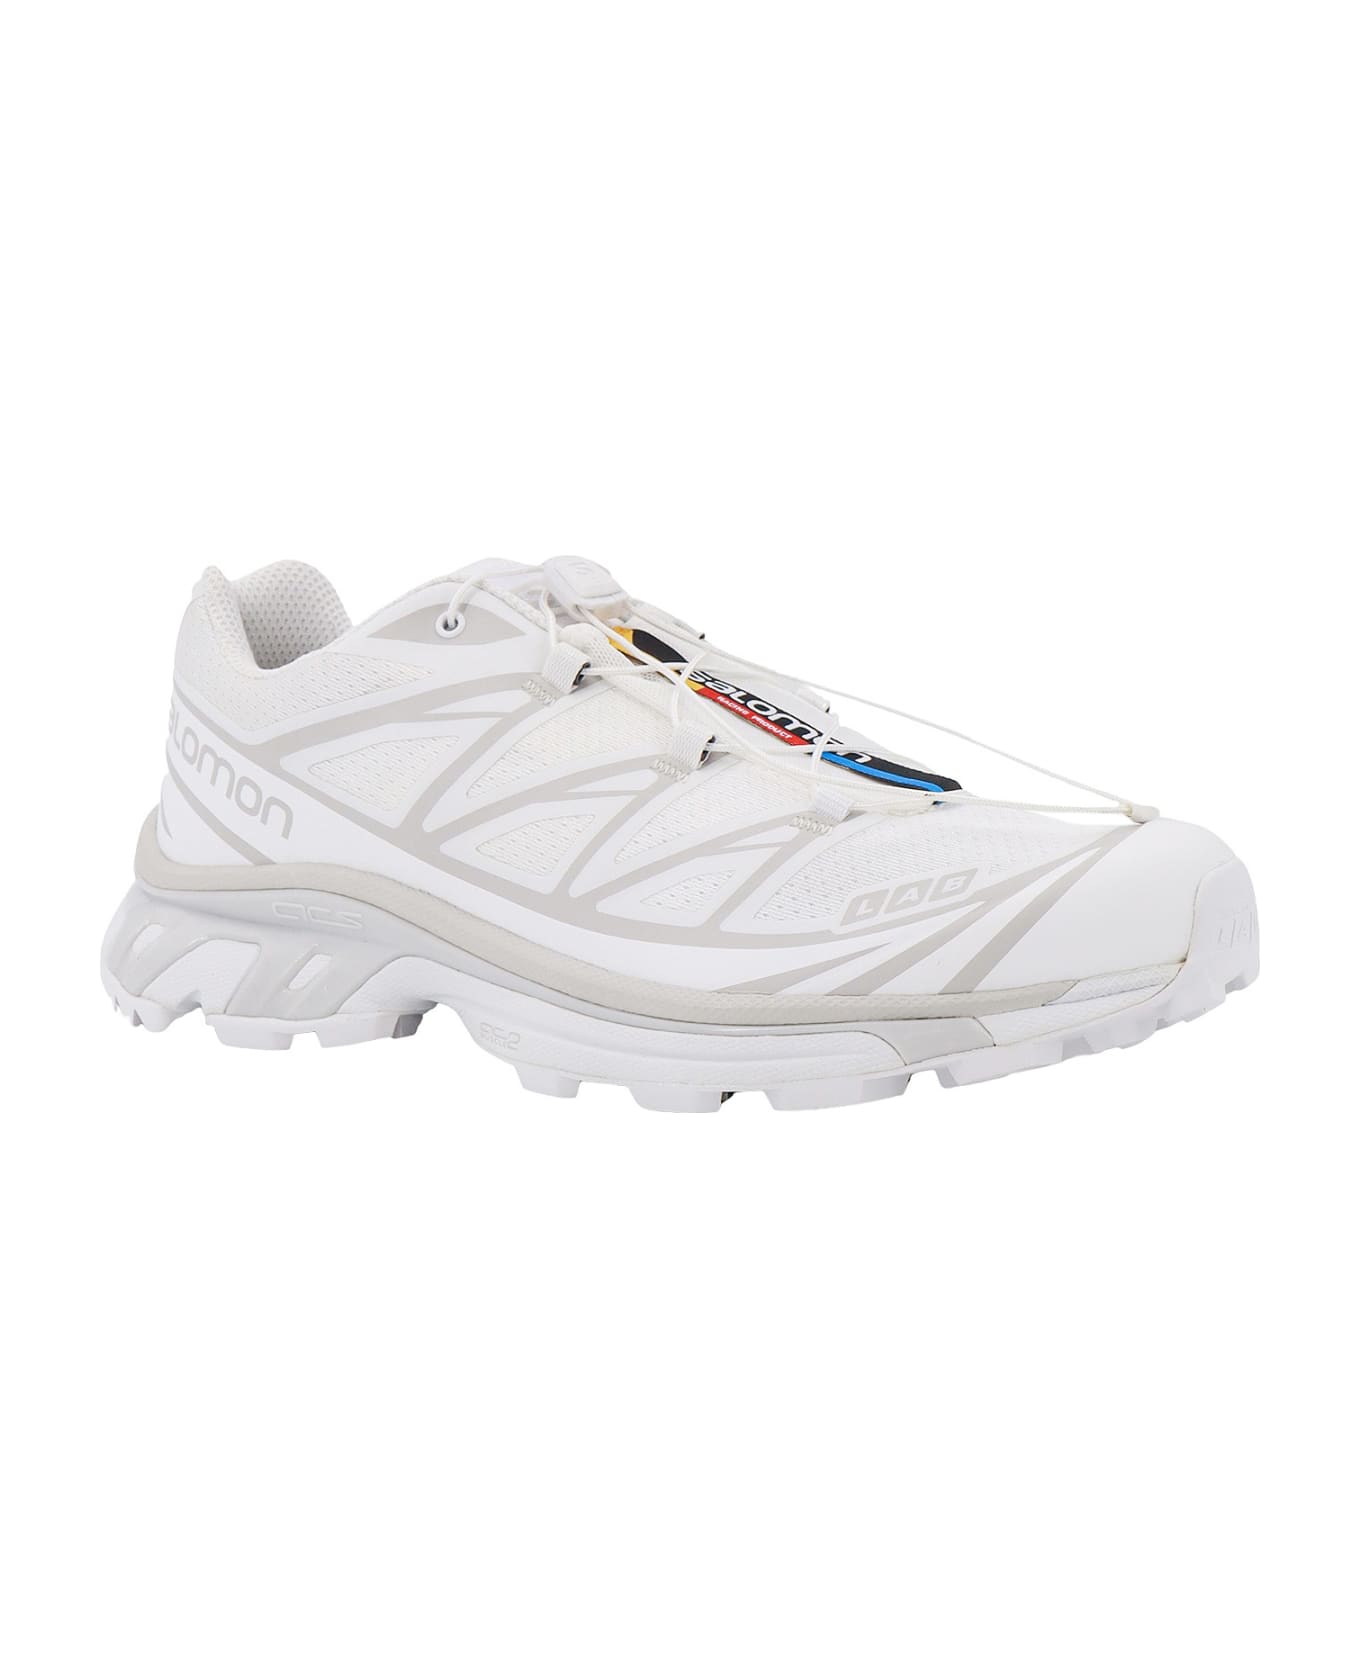 Salomon Xt-6 Sneakers - White